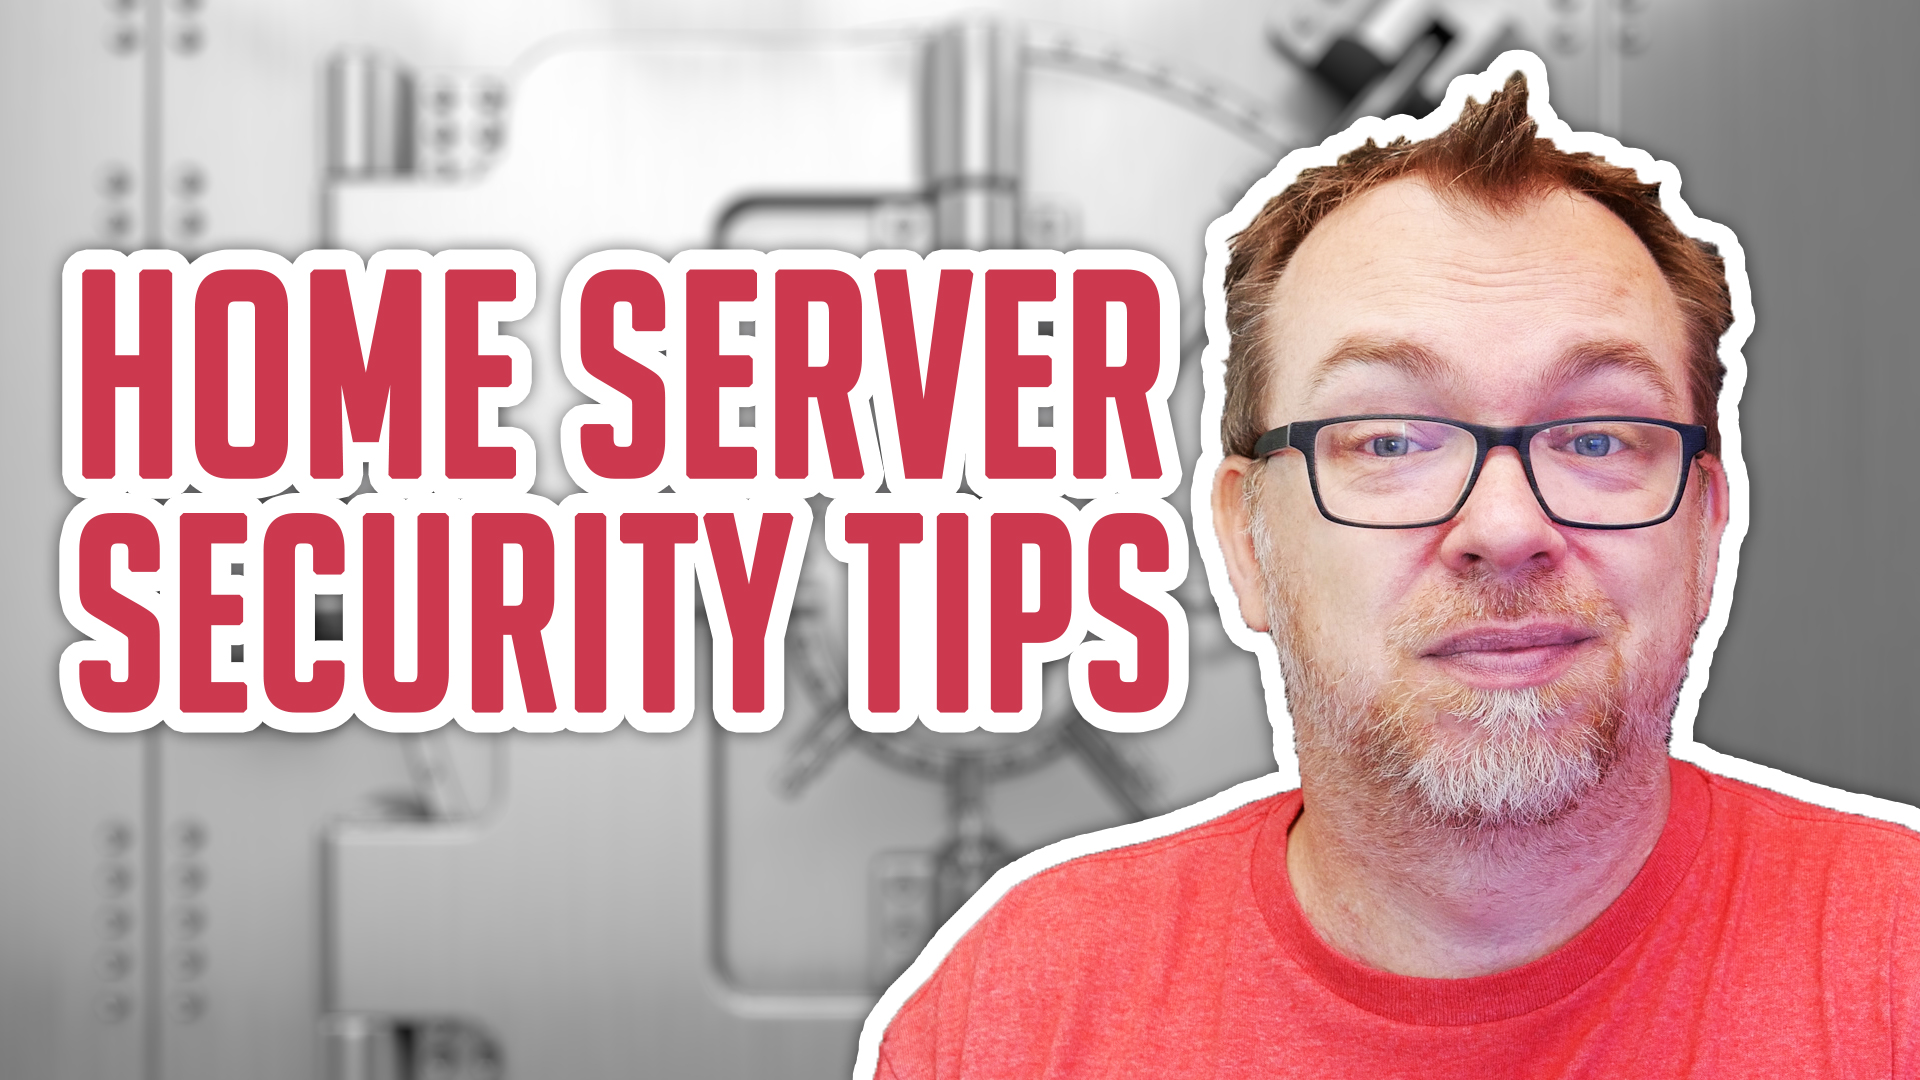 Self-Hosting & Home Server Security Tips